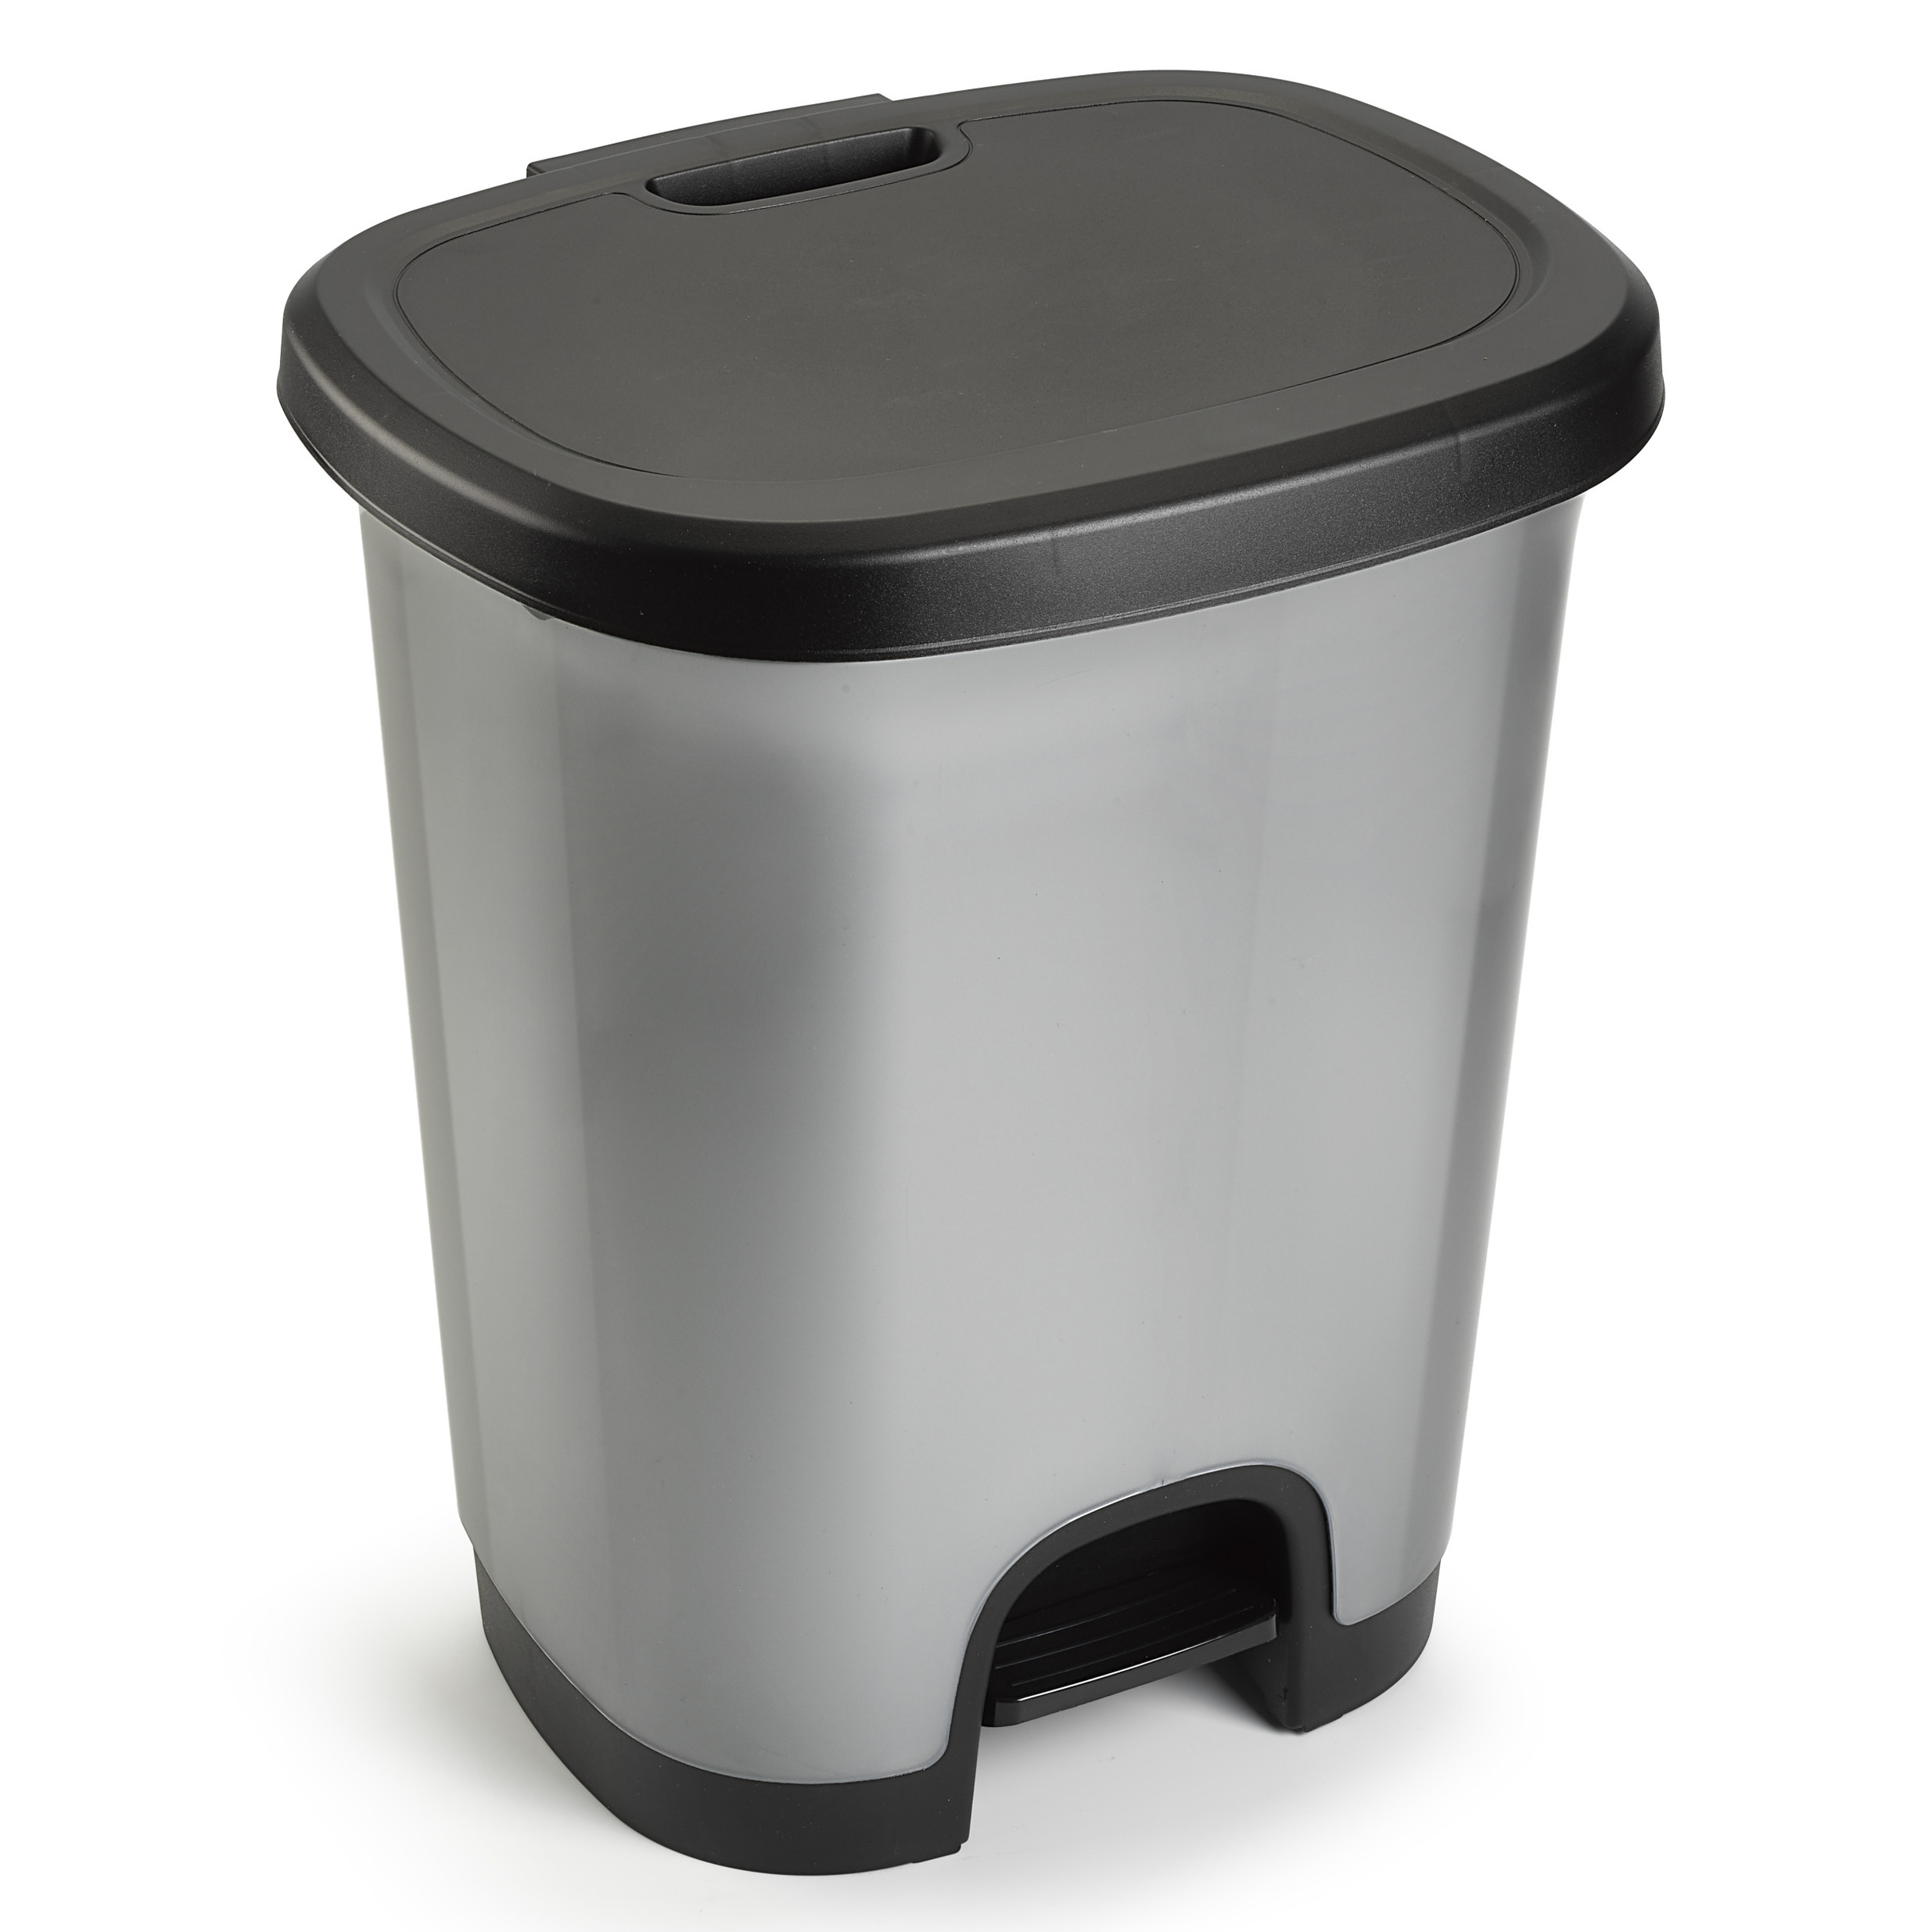 Afvalemmer-vuilnisemmer-pedaalemmer 18 liter in het zilver-zwart met deksel en pedaal